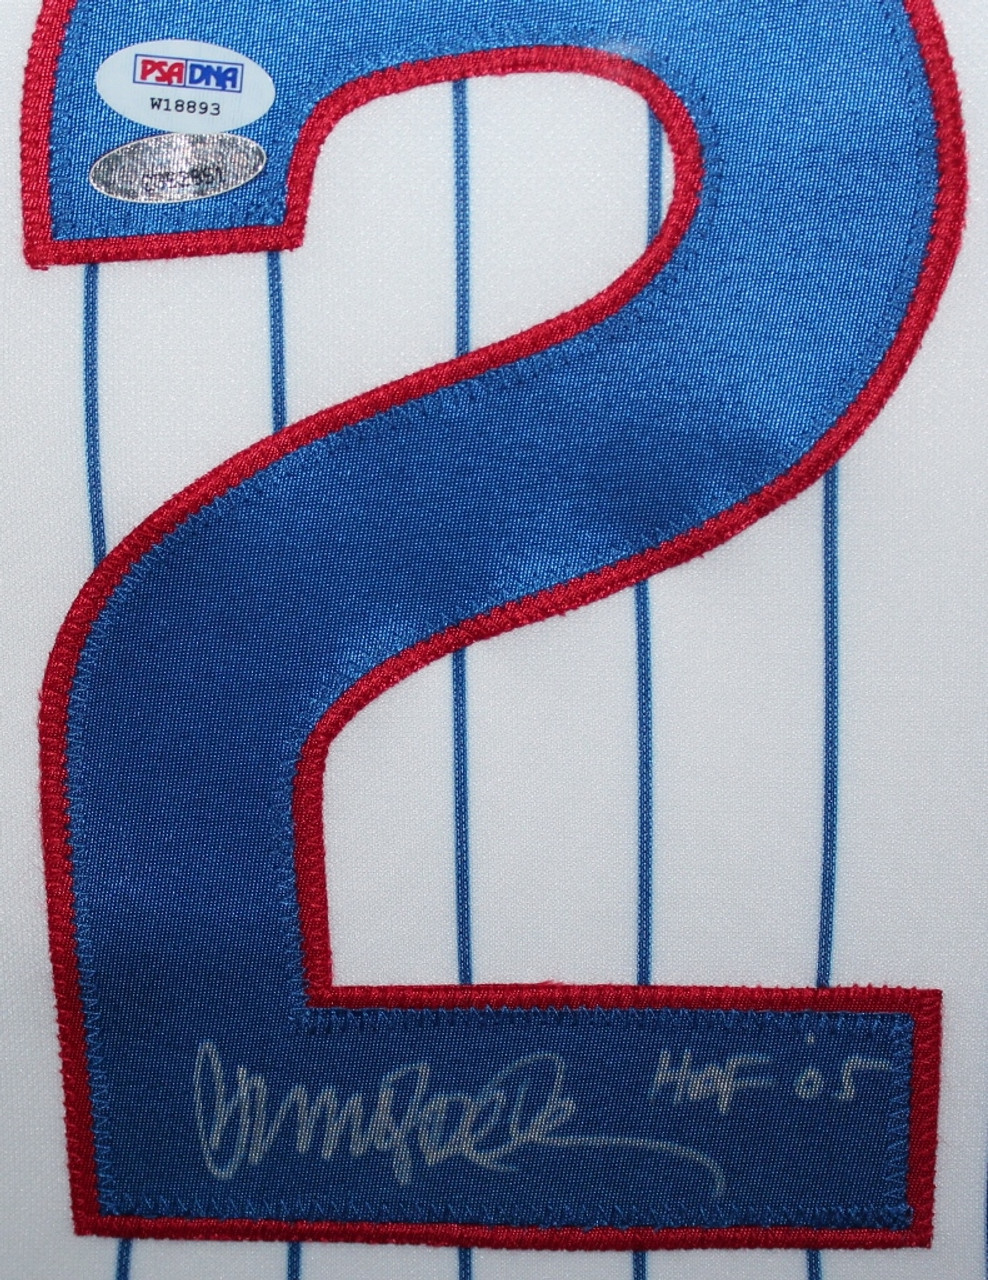 Ryne Sandberg Autographed Chicago Cubs 1984 Jersey Inscribed